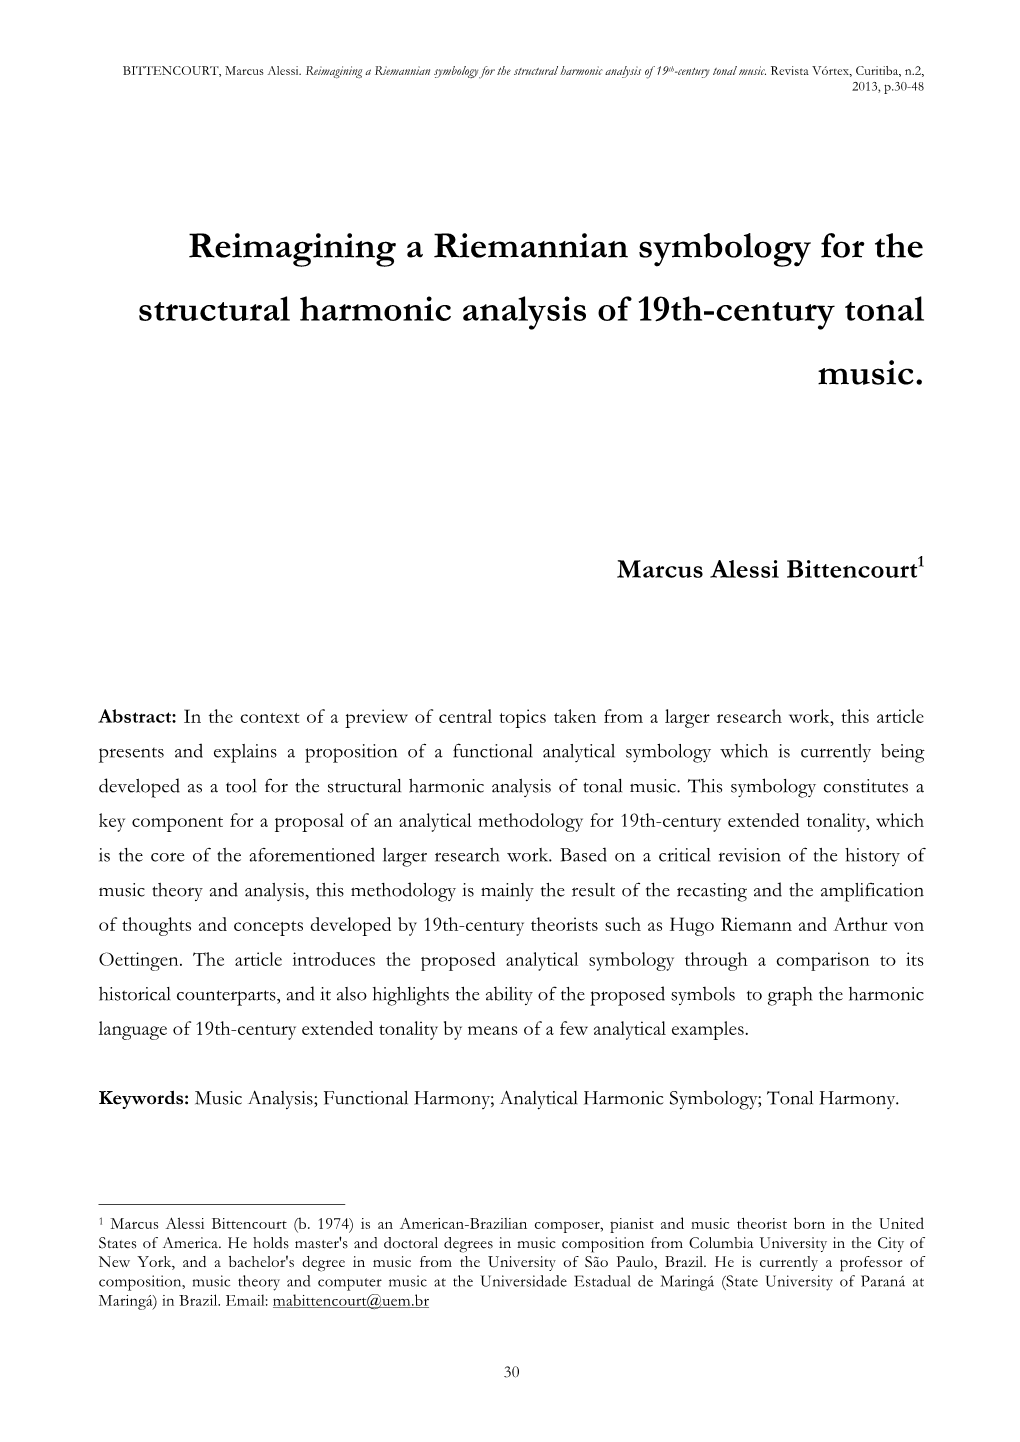 Reimagining a Riemannian Symbology for the Structural Harmonic Analysis of 19Th-Century Tonal Music. Revista Vórtex, Curitiba, N.2, 2013, P.30-48